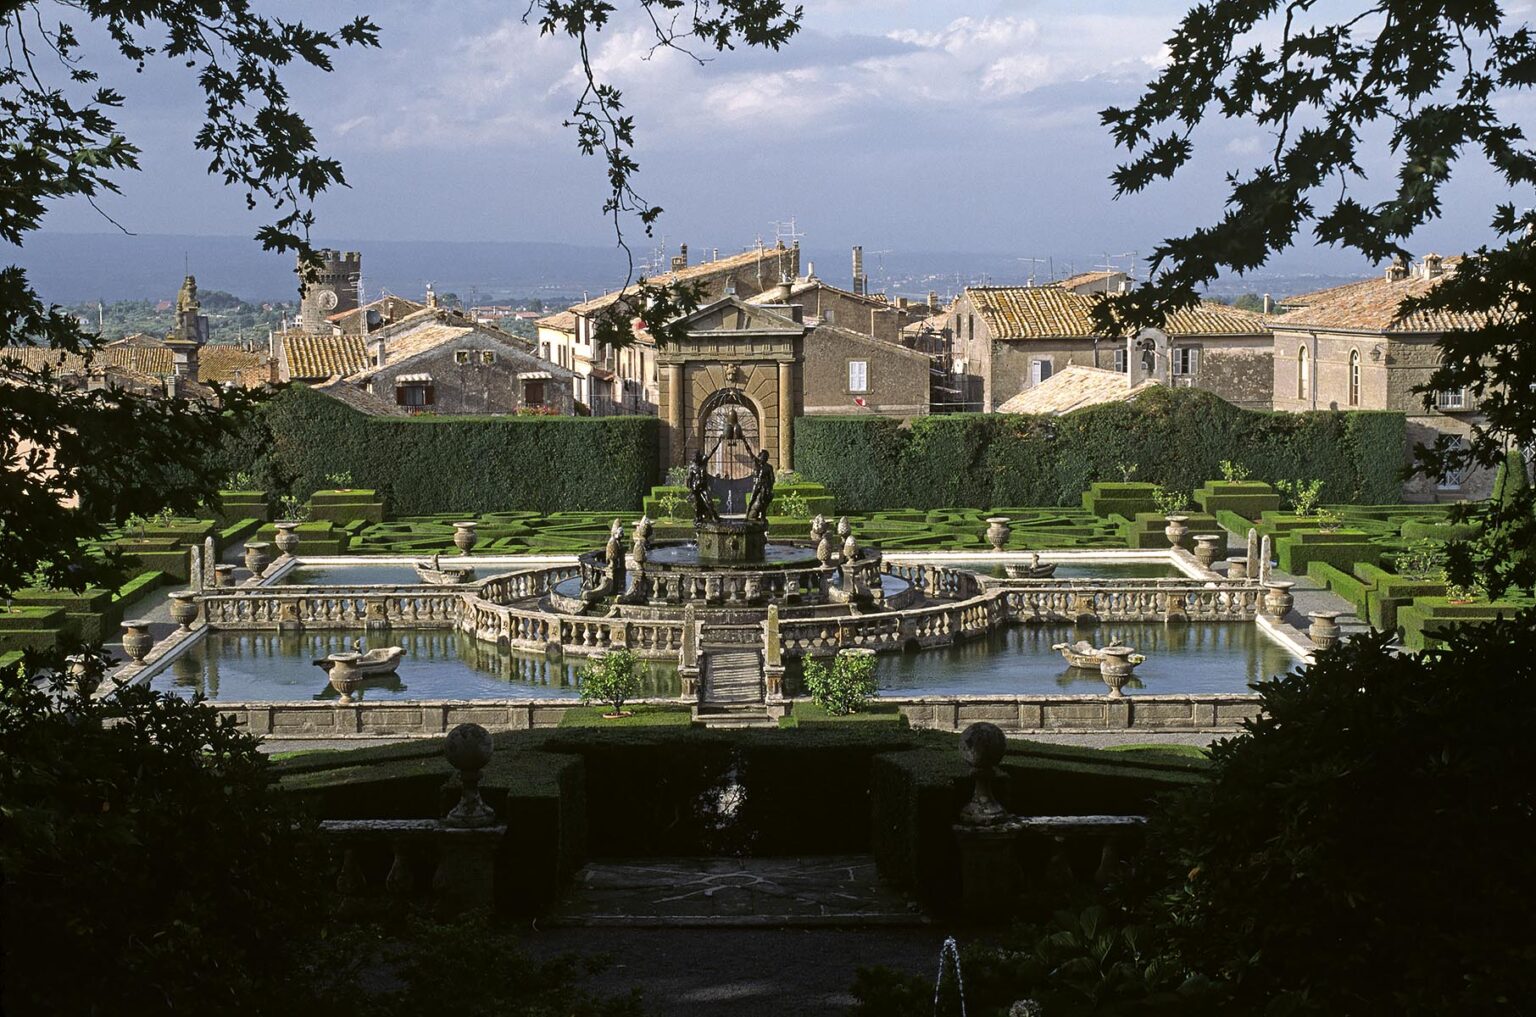 The Gardens of VILLA LANTE (Italian Renaissance Garden, 1566) in the town of VITERBO - TUSCANY, ITALY